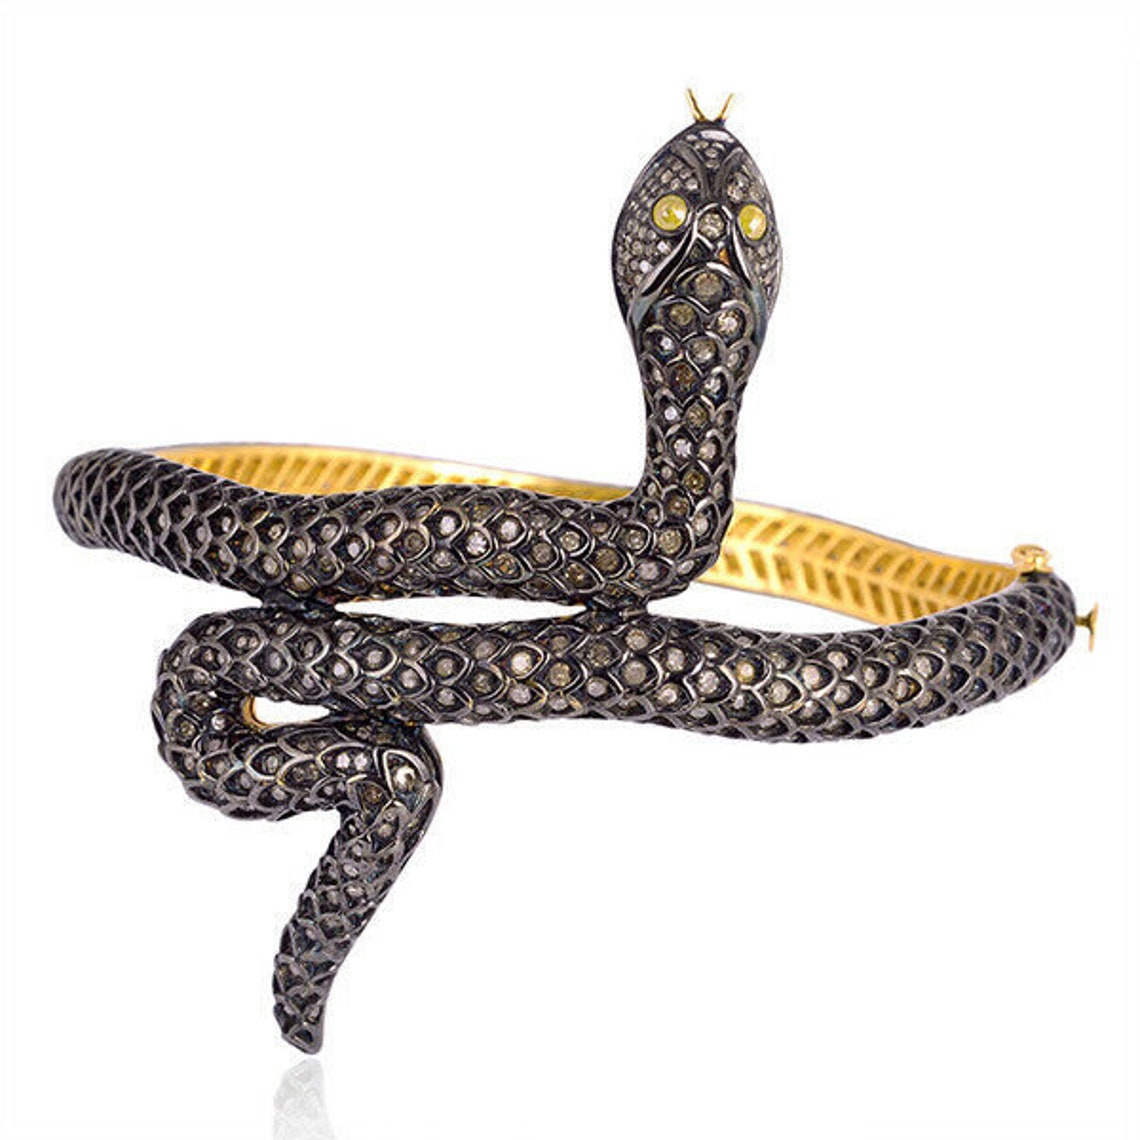 Snake bangle